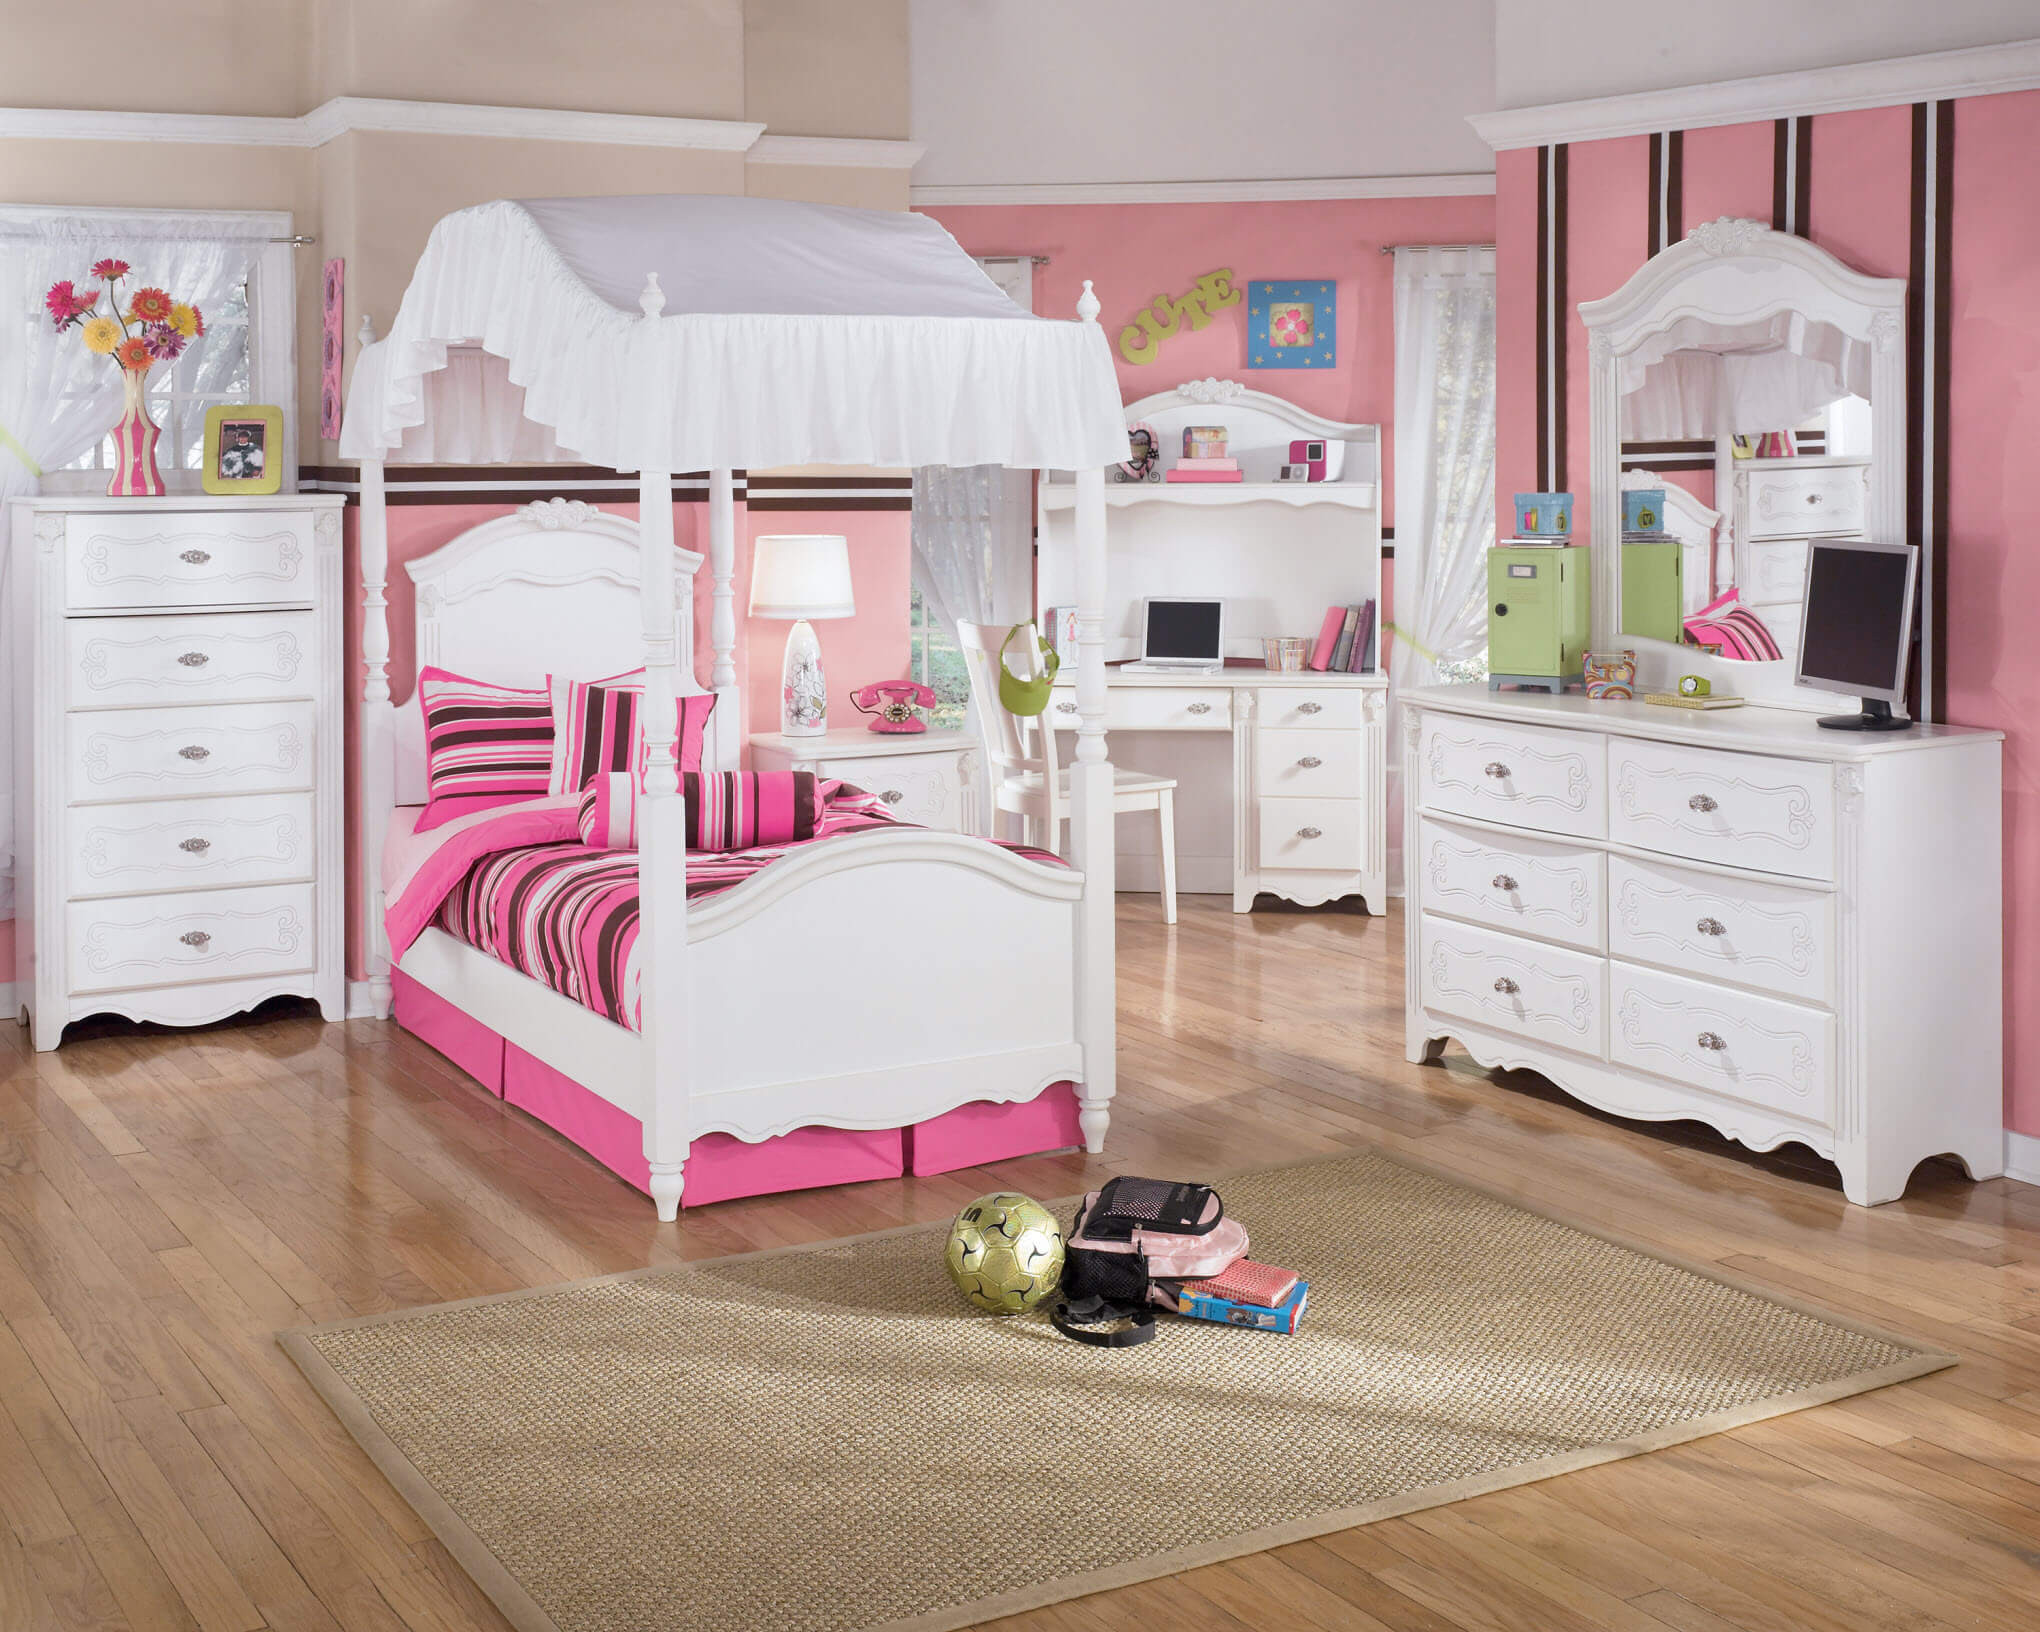 Girls Bedroom Sets Furniture
 25 Romantic and Modern Ideas for Girls Bedroom Sets